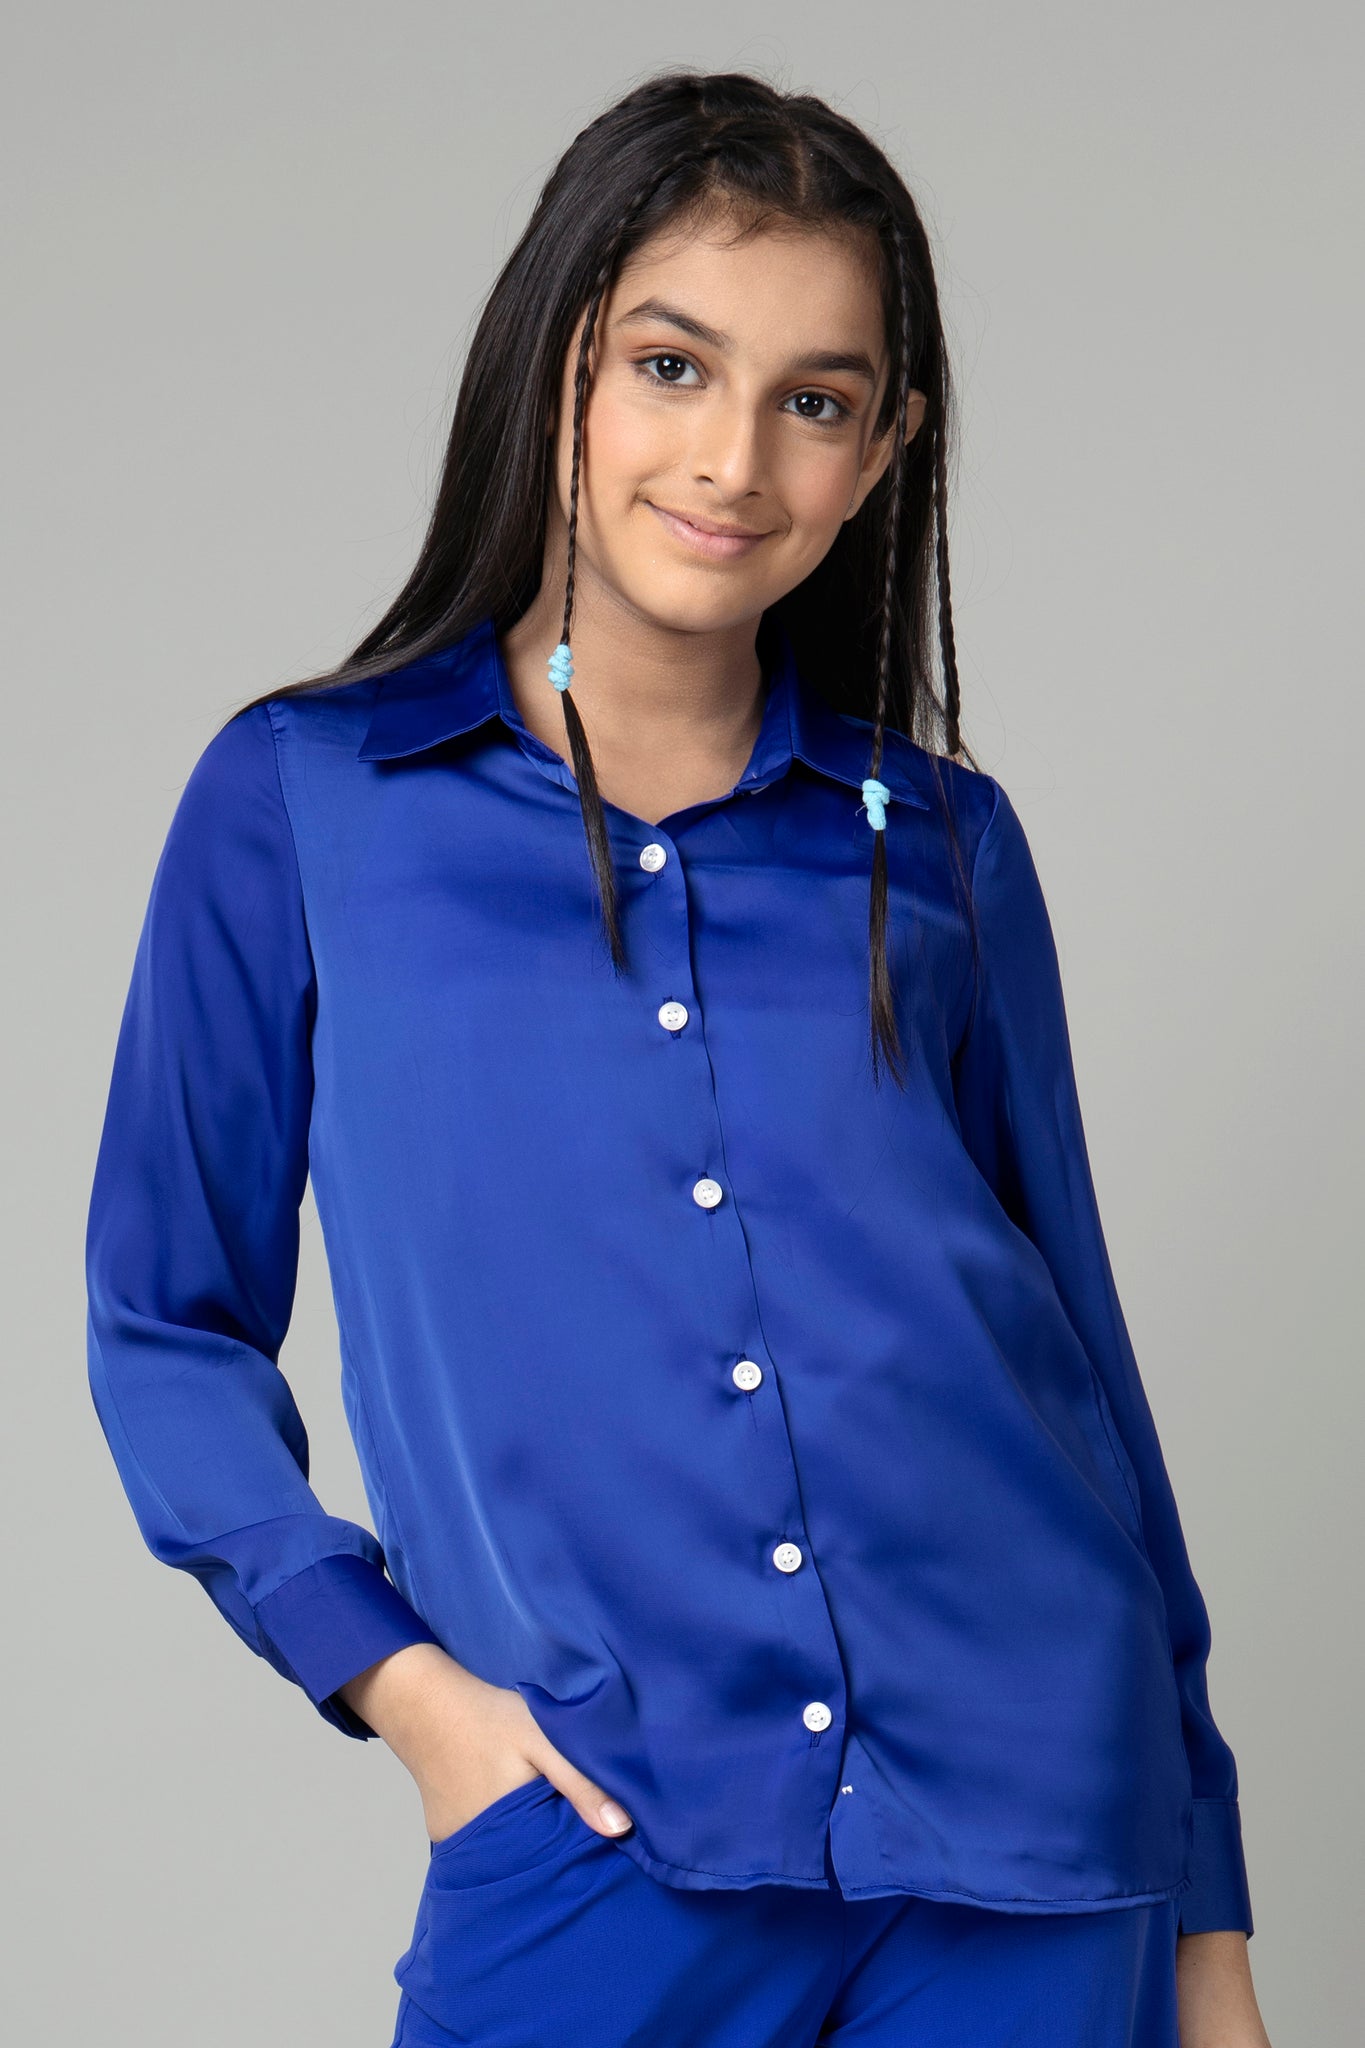 Cool Blue Shirt For Girls